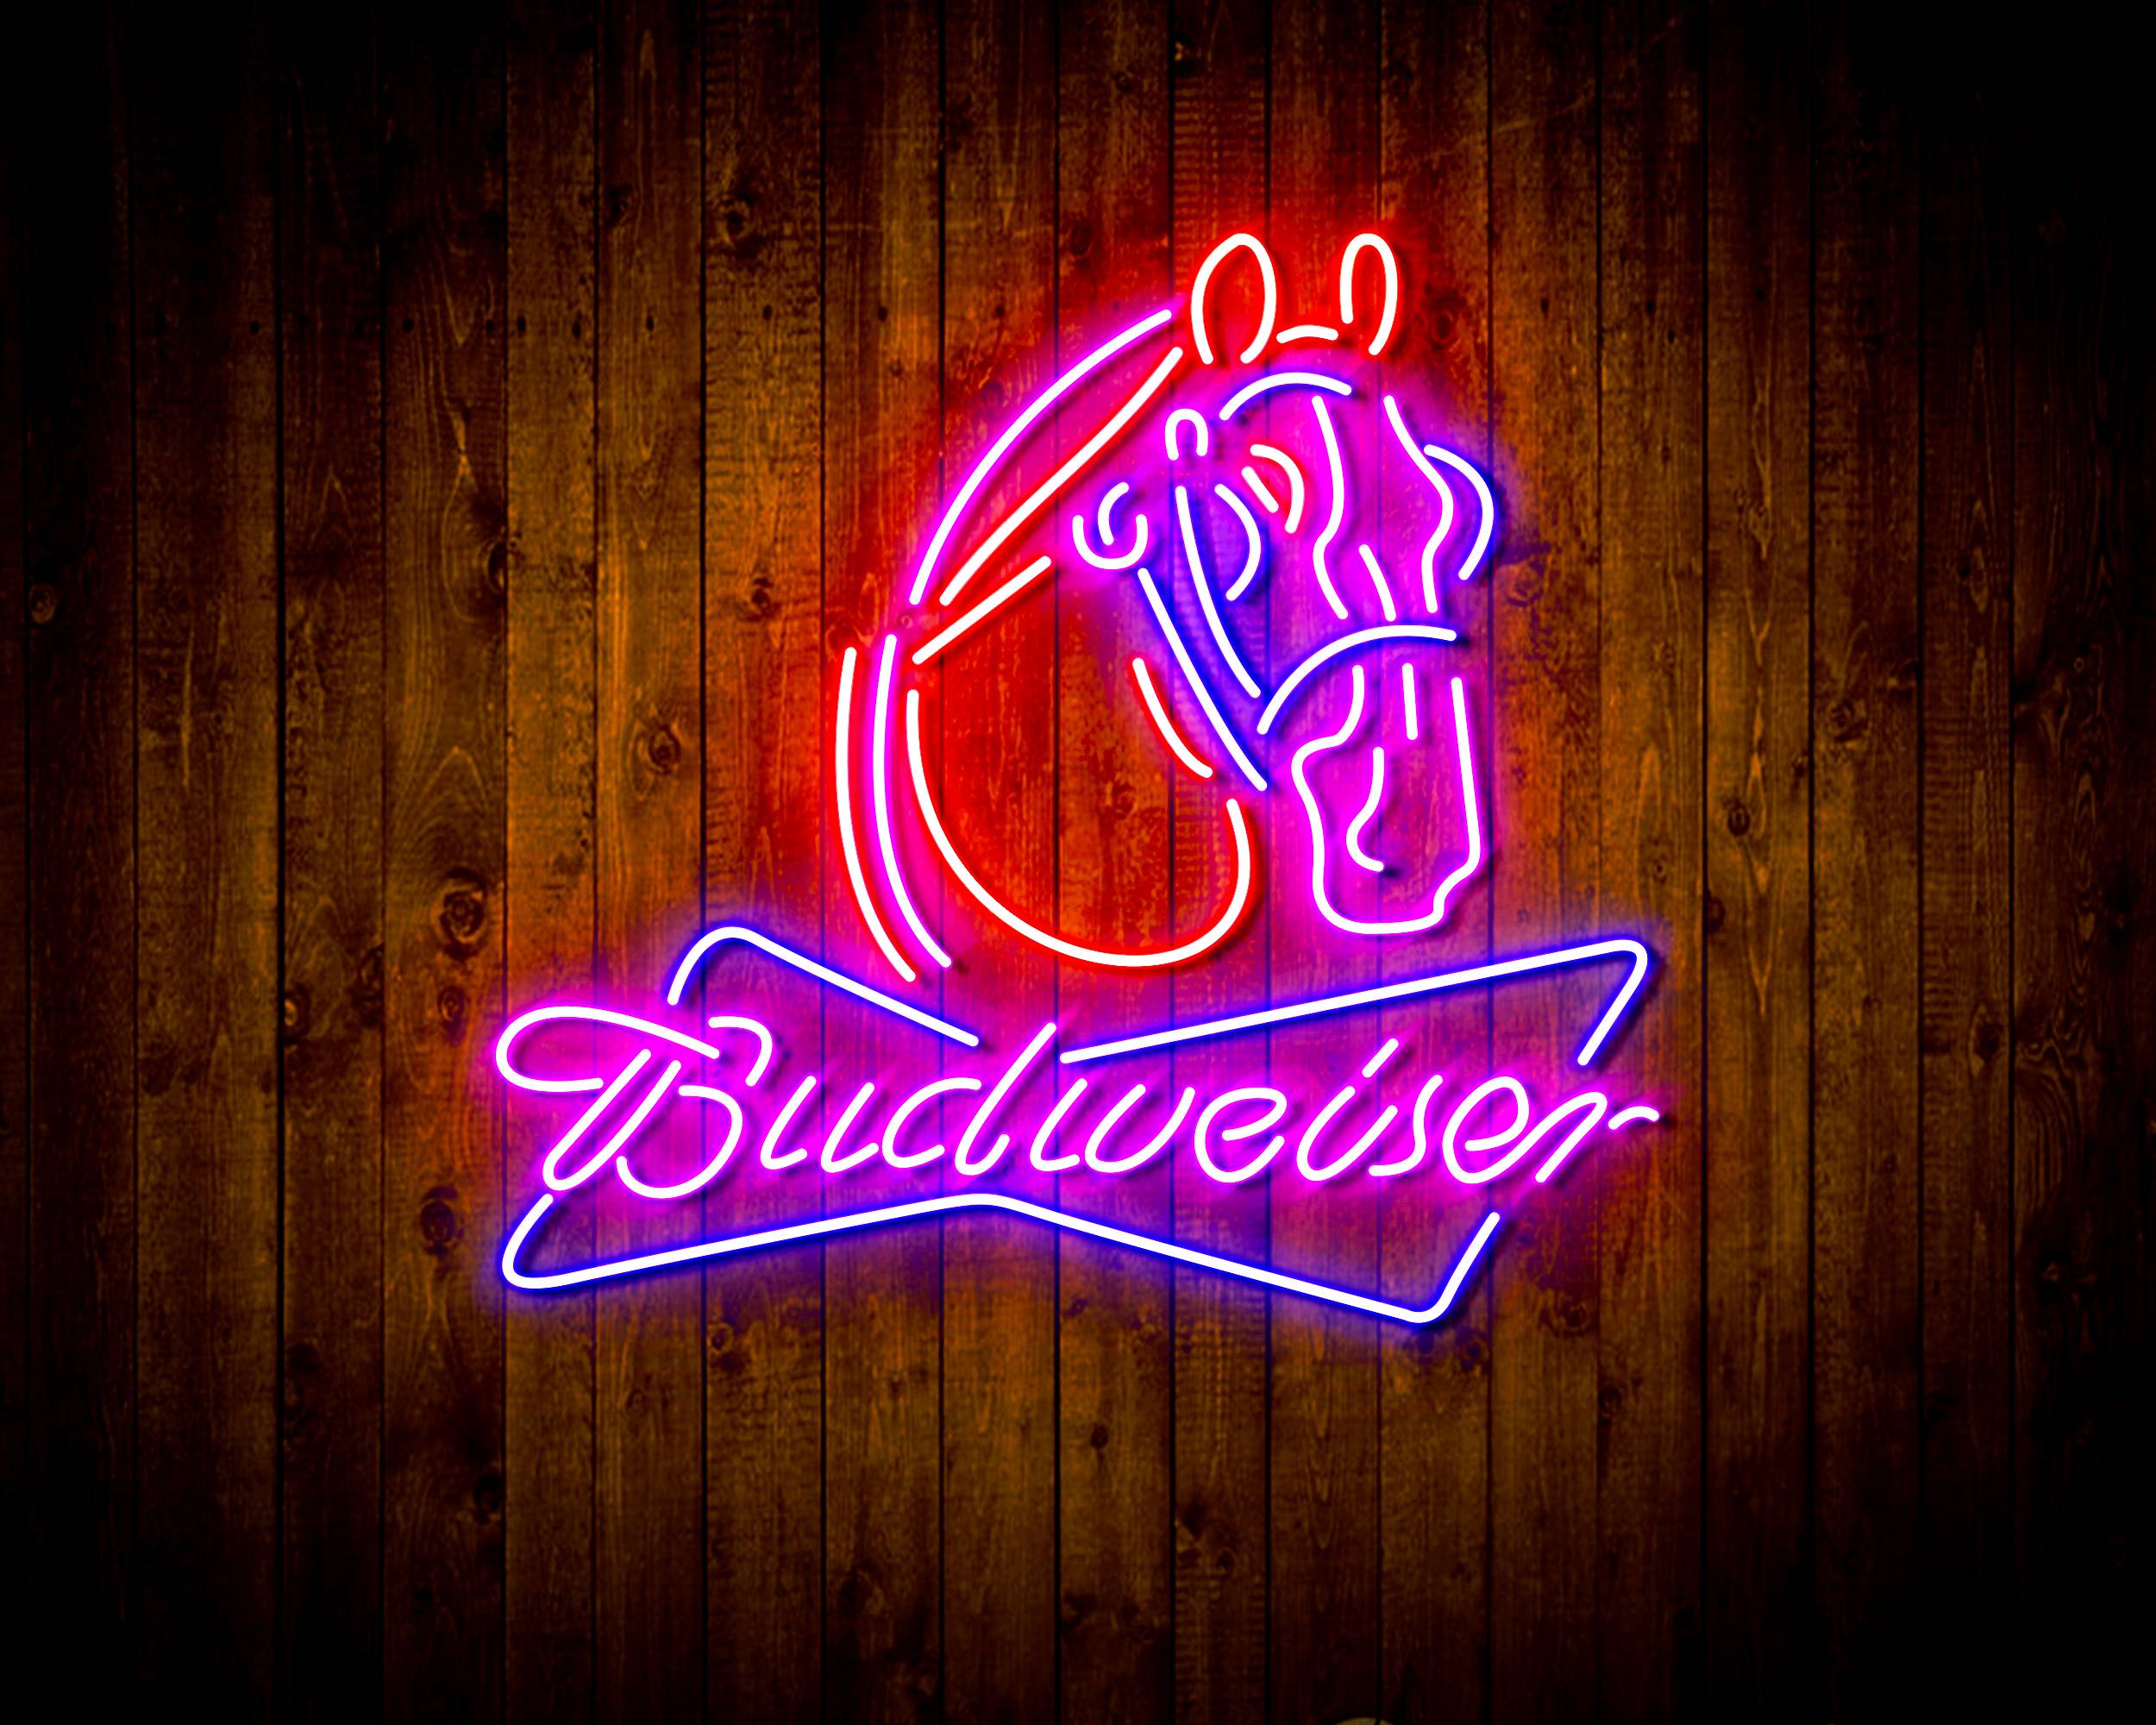 Budweiser with Horse Head Handmade LED Neon Light Sign